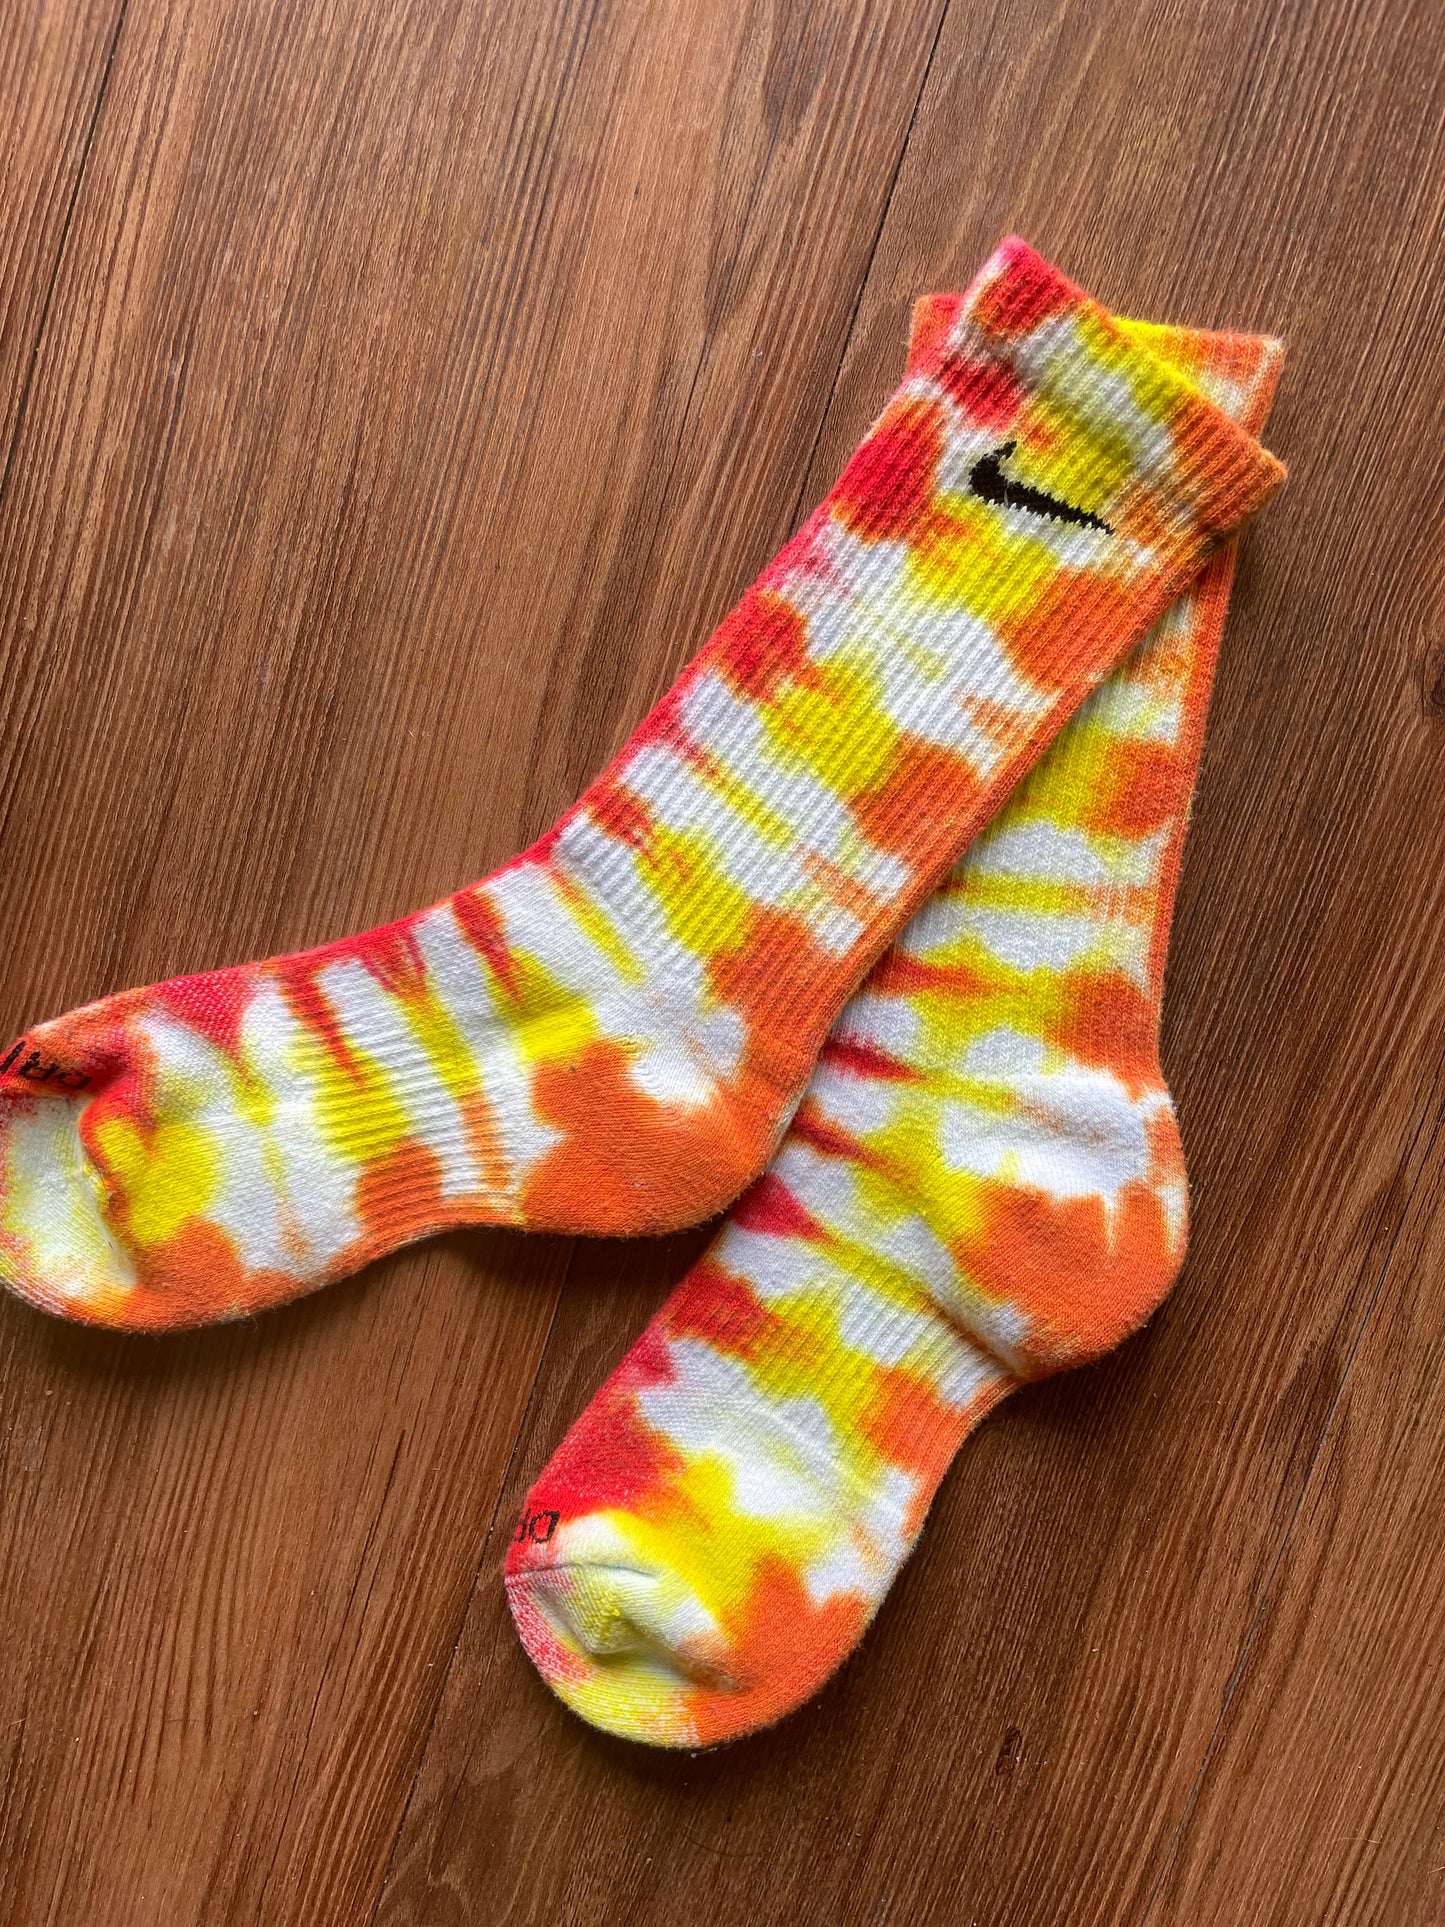 Red, Orange, and Yellow Tie Dye Nike Dri-FIT Training Socks - Size Medium (Men's 6-8/Women's 7-10)